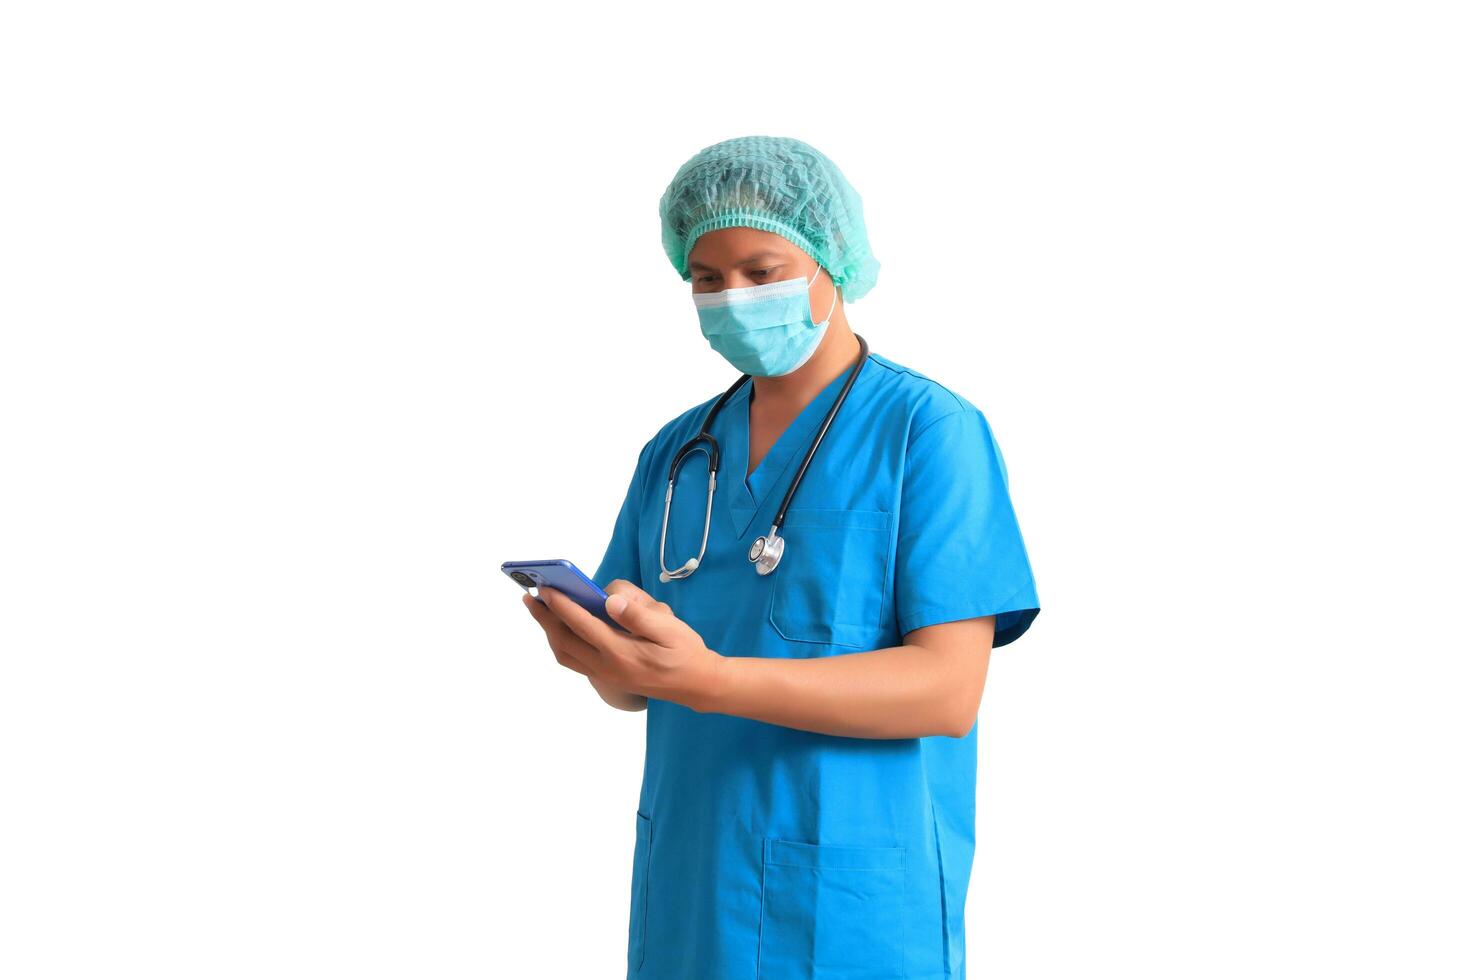 Masculin médecin portant bleu costume photo